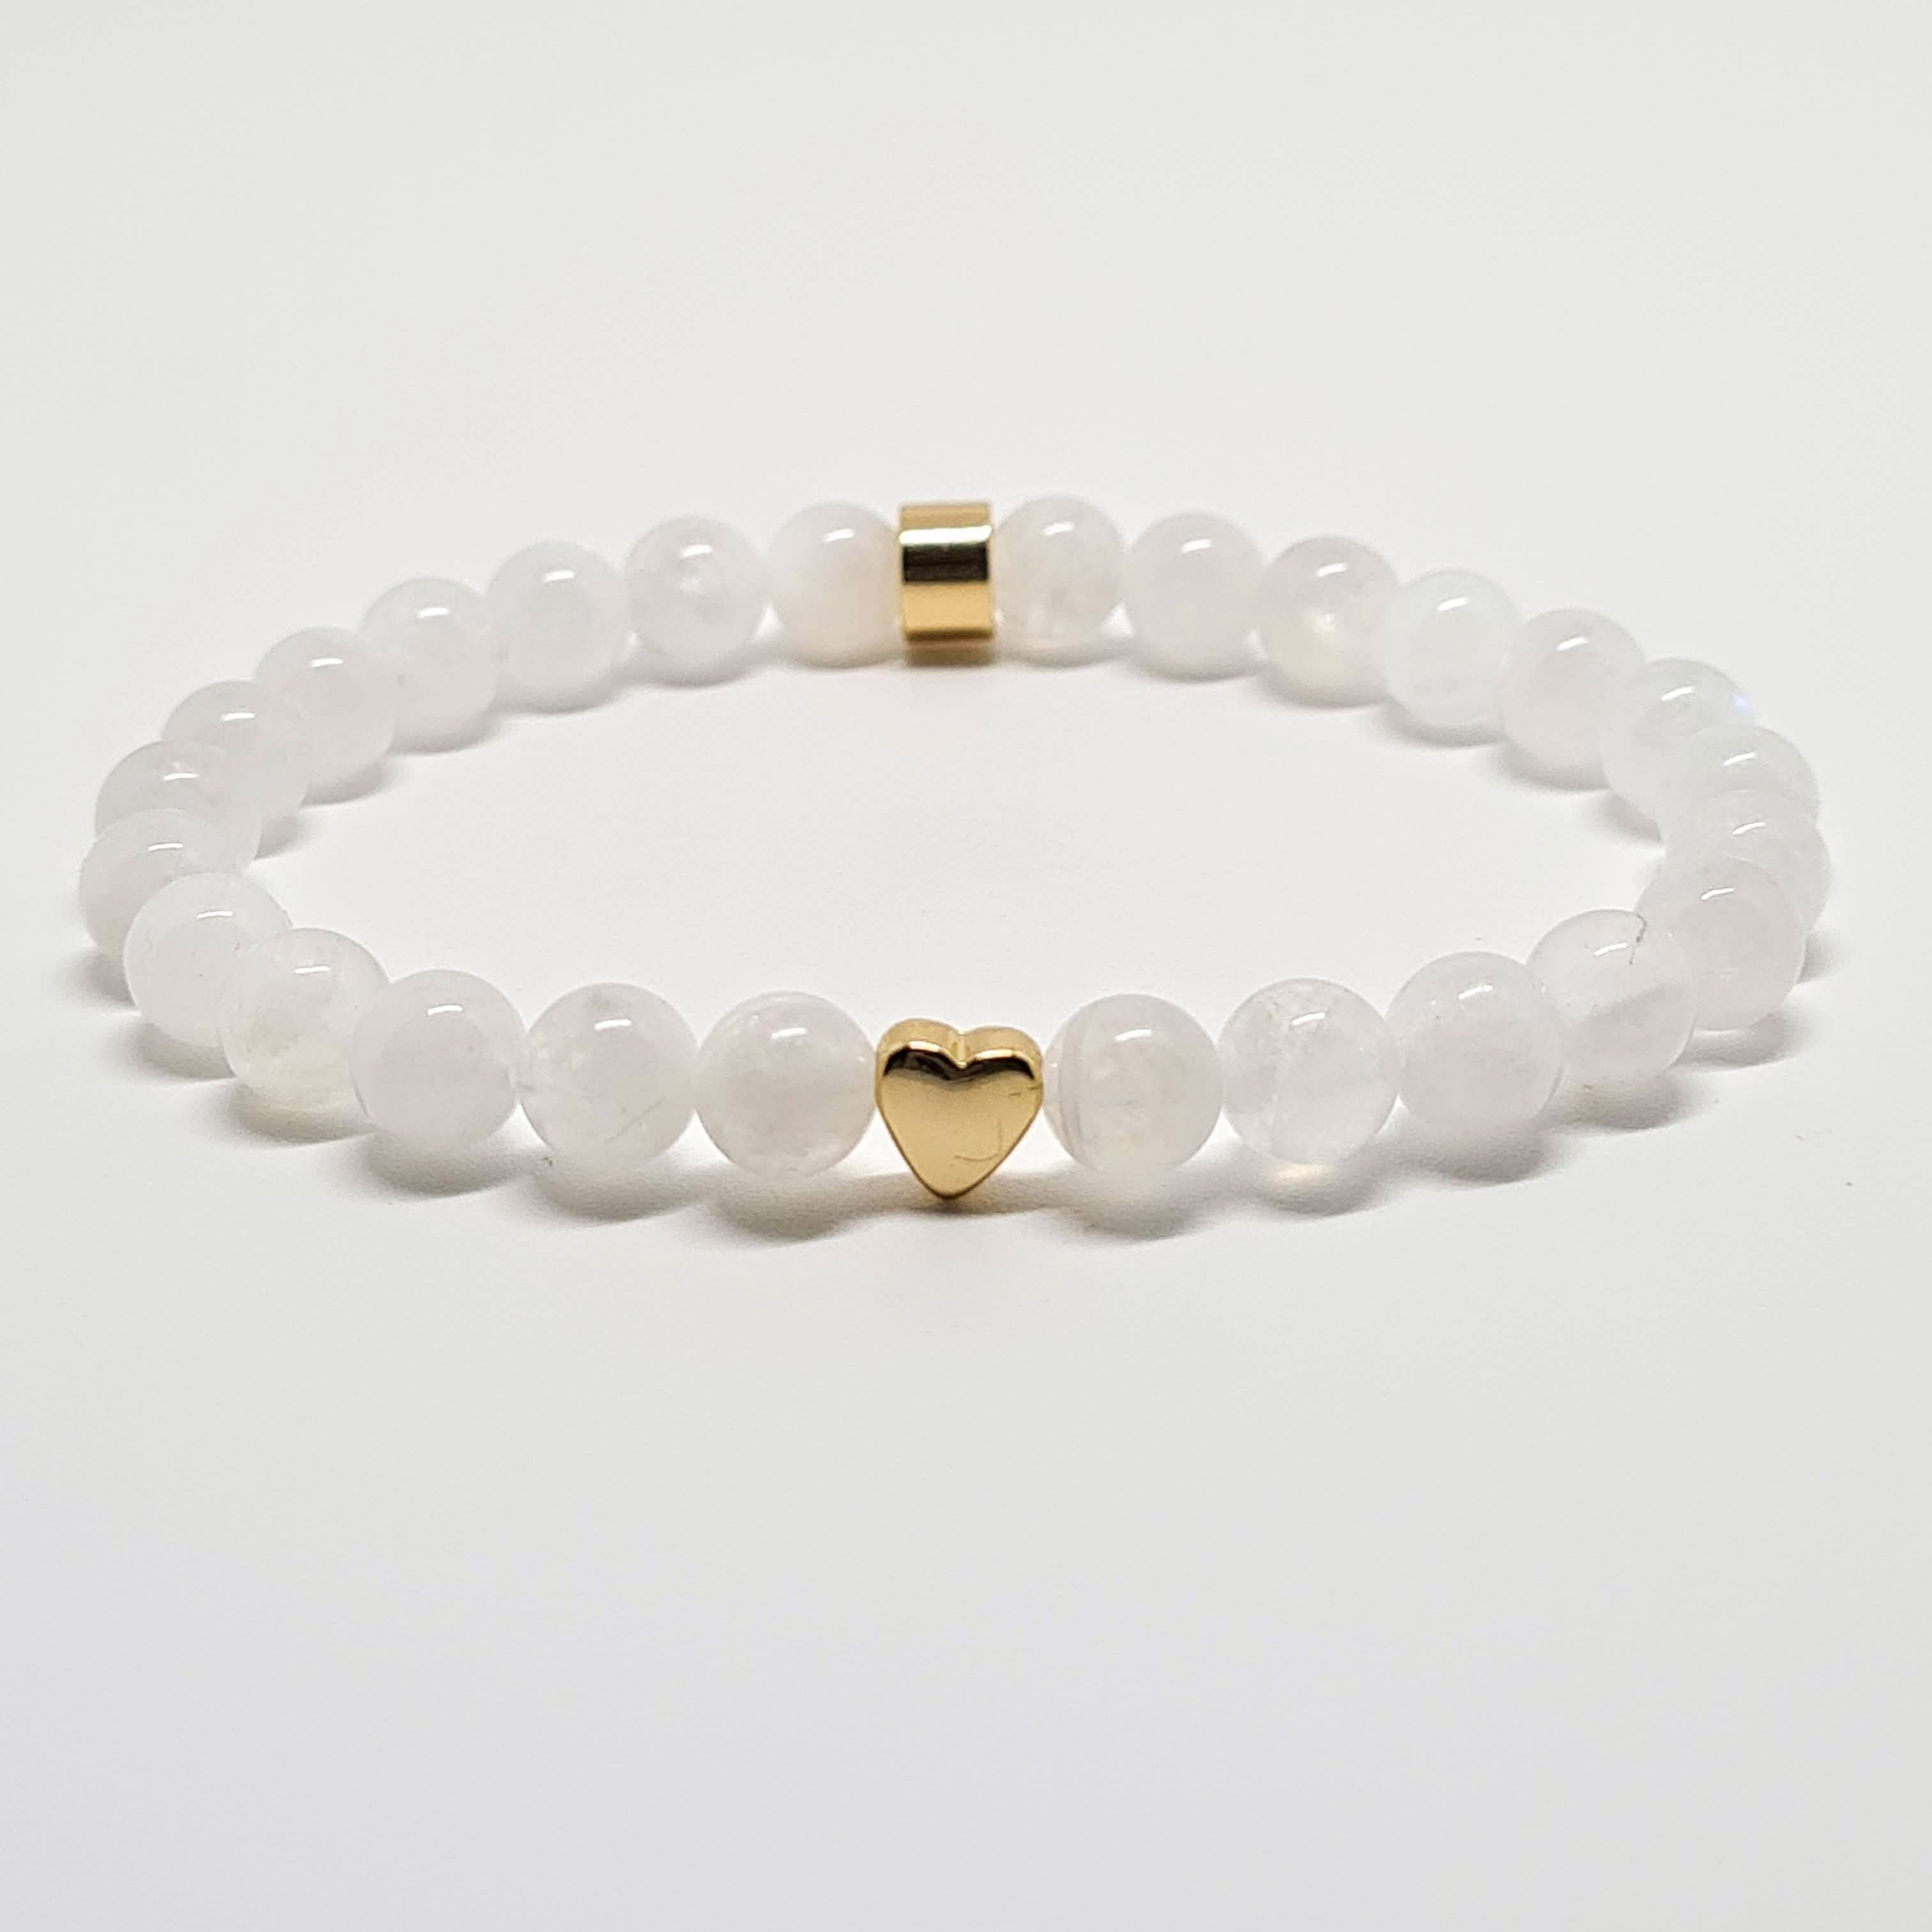 Moonstone Energy Gemstone Bracelet with Love Heart